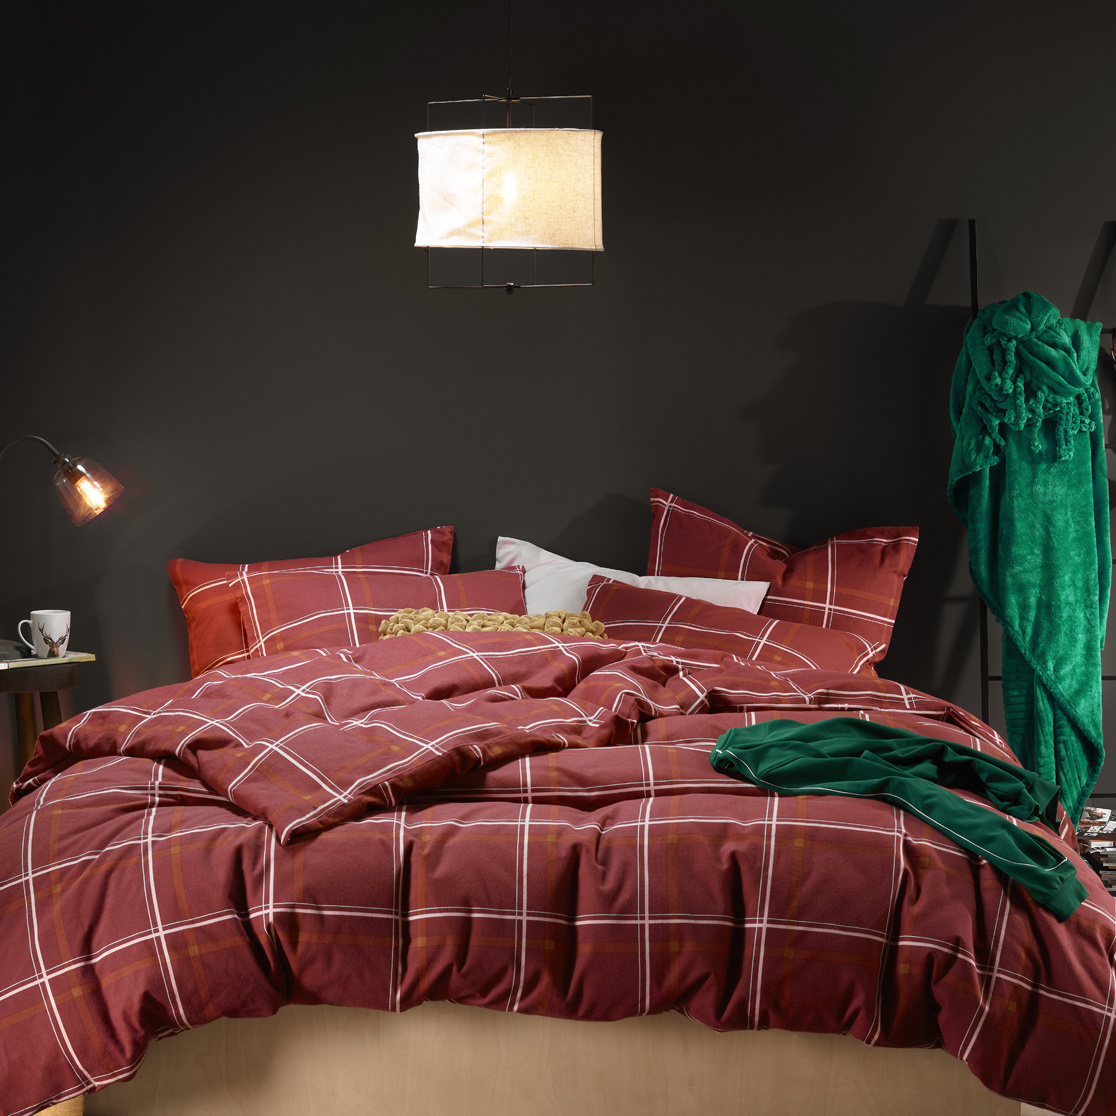 Moodit Duvet cover Rosaline Burgundy - Hotel size - 260 x 240 cm - Cotton Flannel